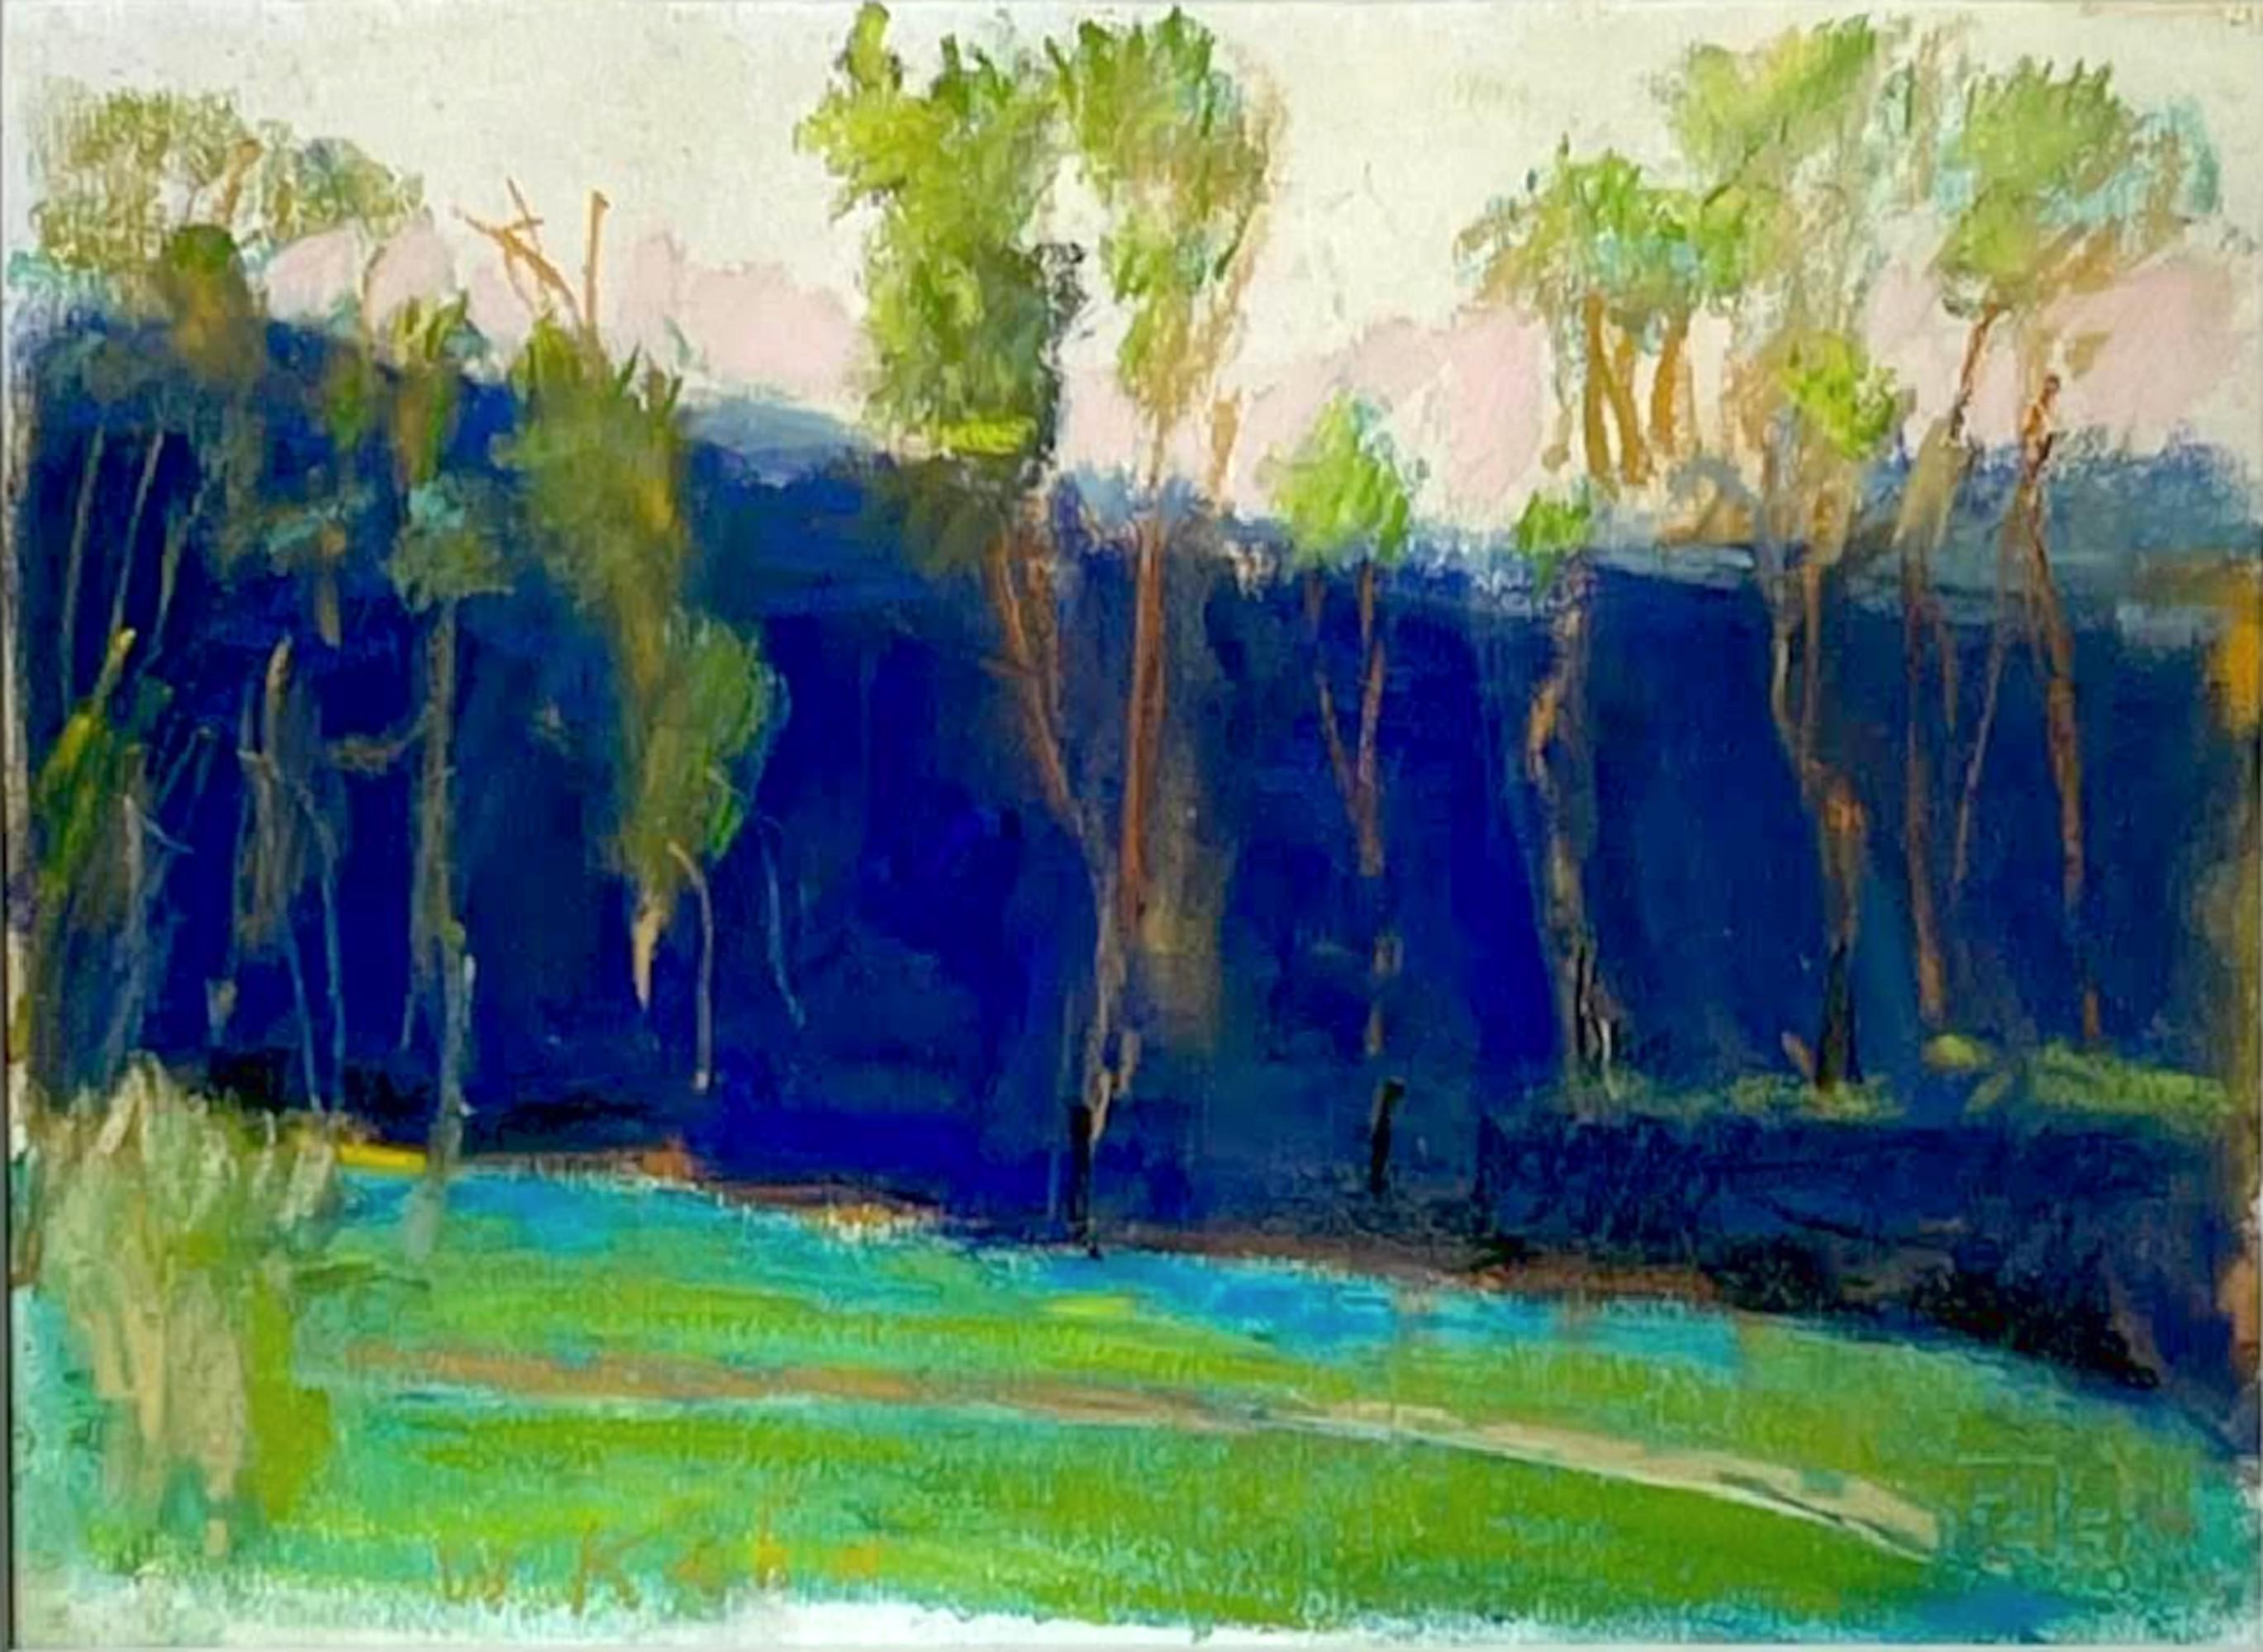 Wolf Kahn Landscape Art - Blau-Grün (Blue-Green) unique pastel painting signed, authenticated, Framed